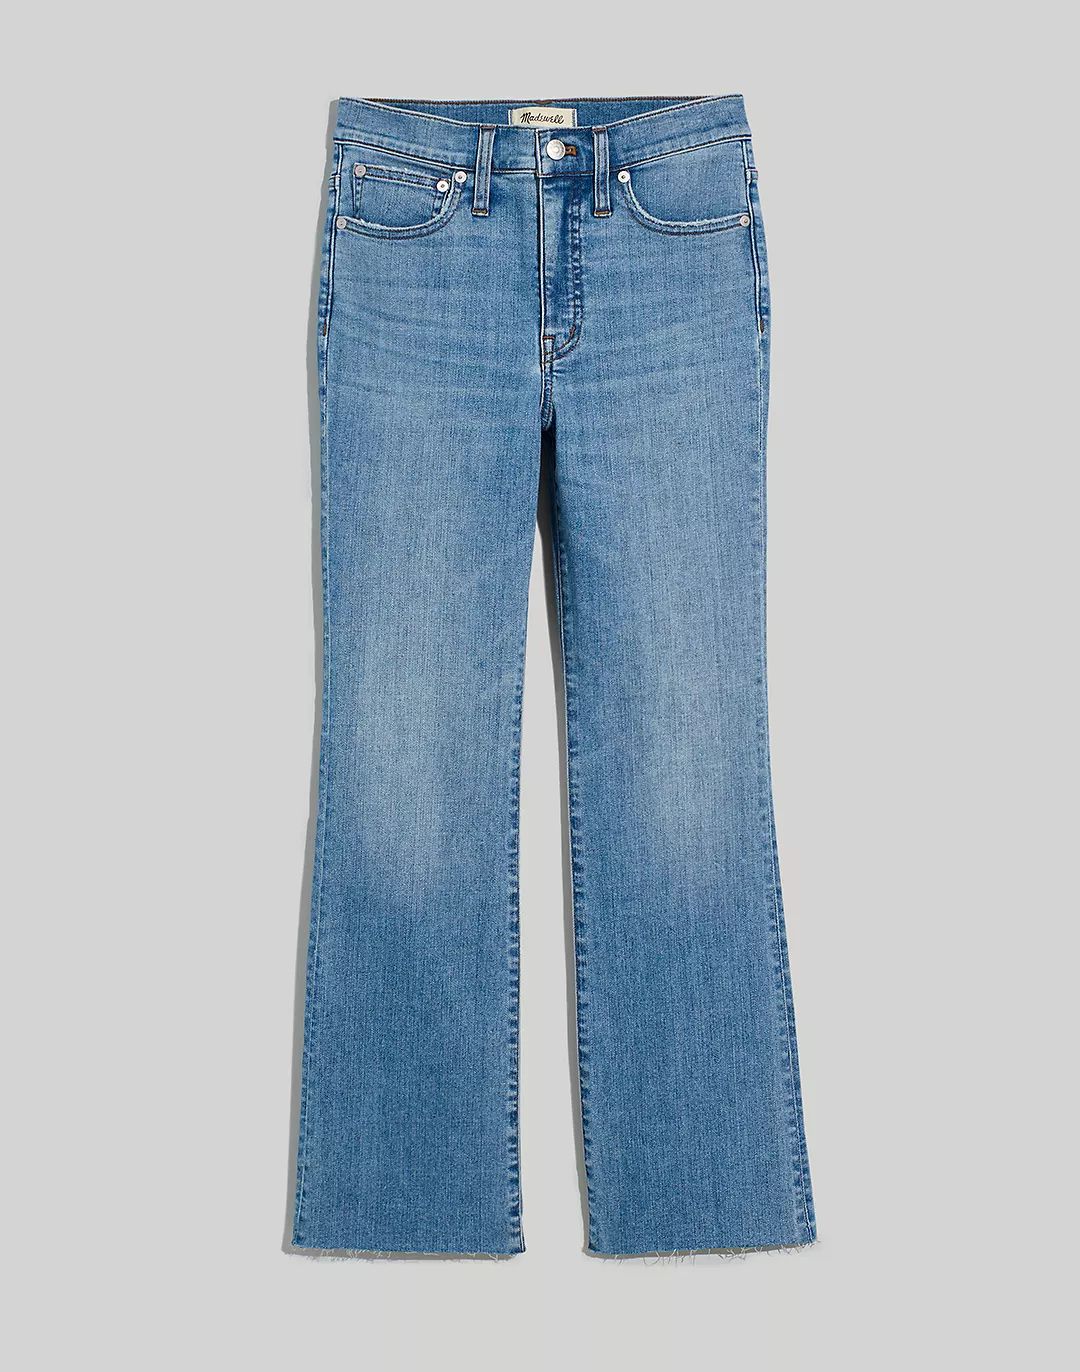 Cali Demi-Boot Jeans in Shoreham Wash | Madewell